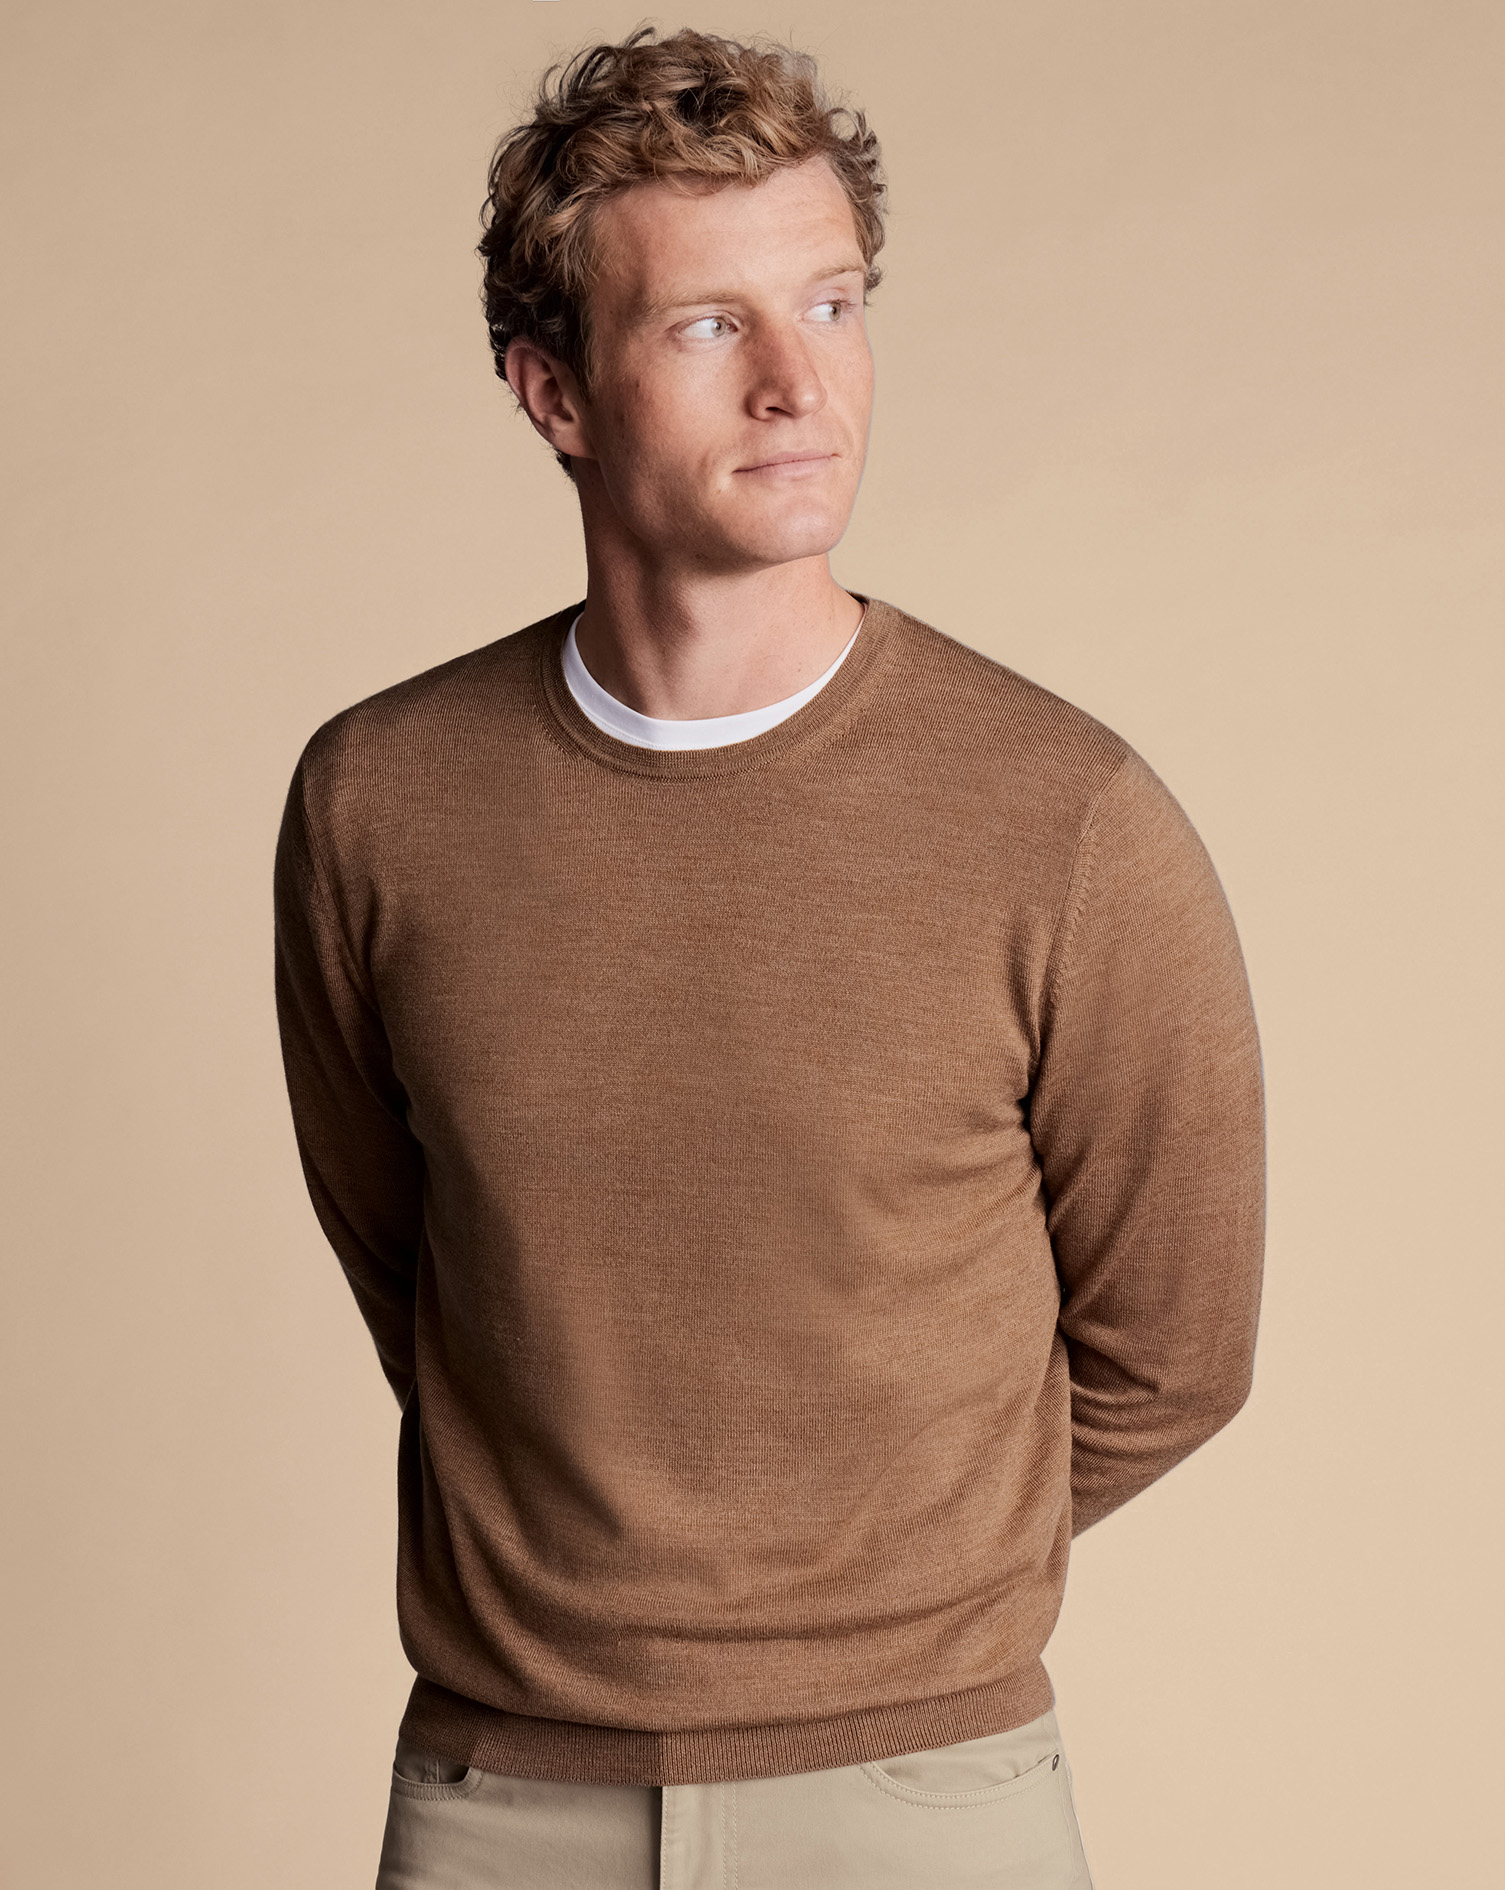 Men's Charles Tyrwhitt Merino Crew Neck Sweater - Sand Brown Neutral Size Medium Wool
